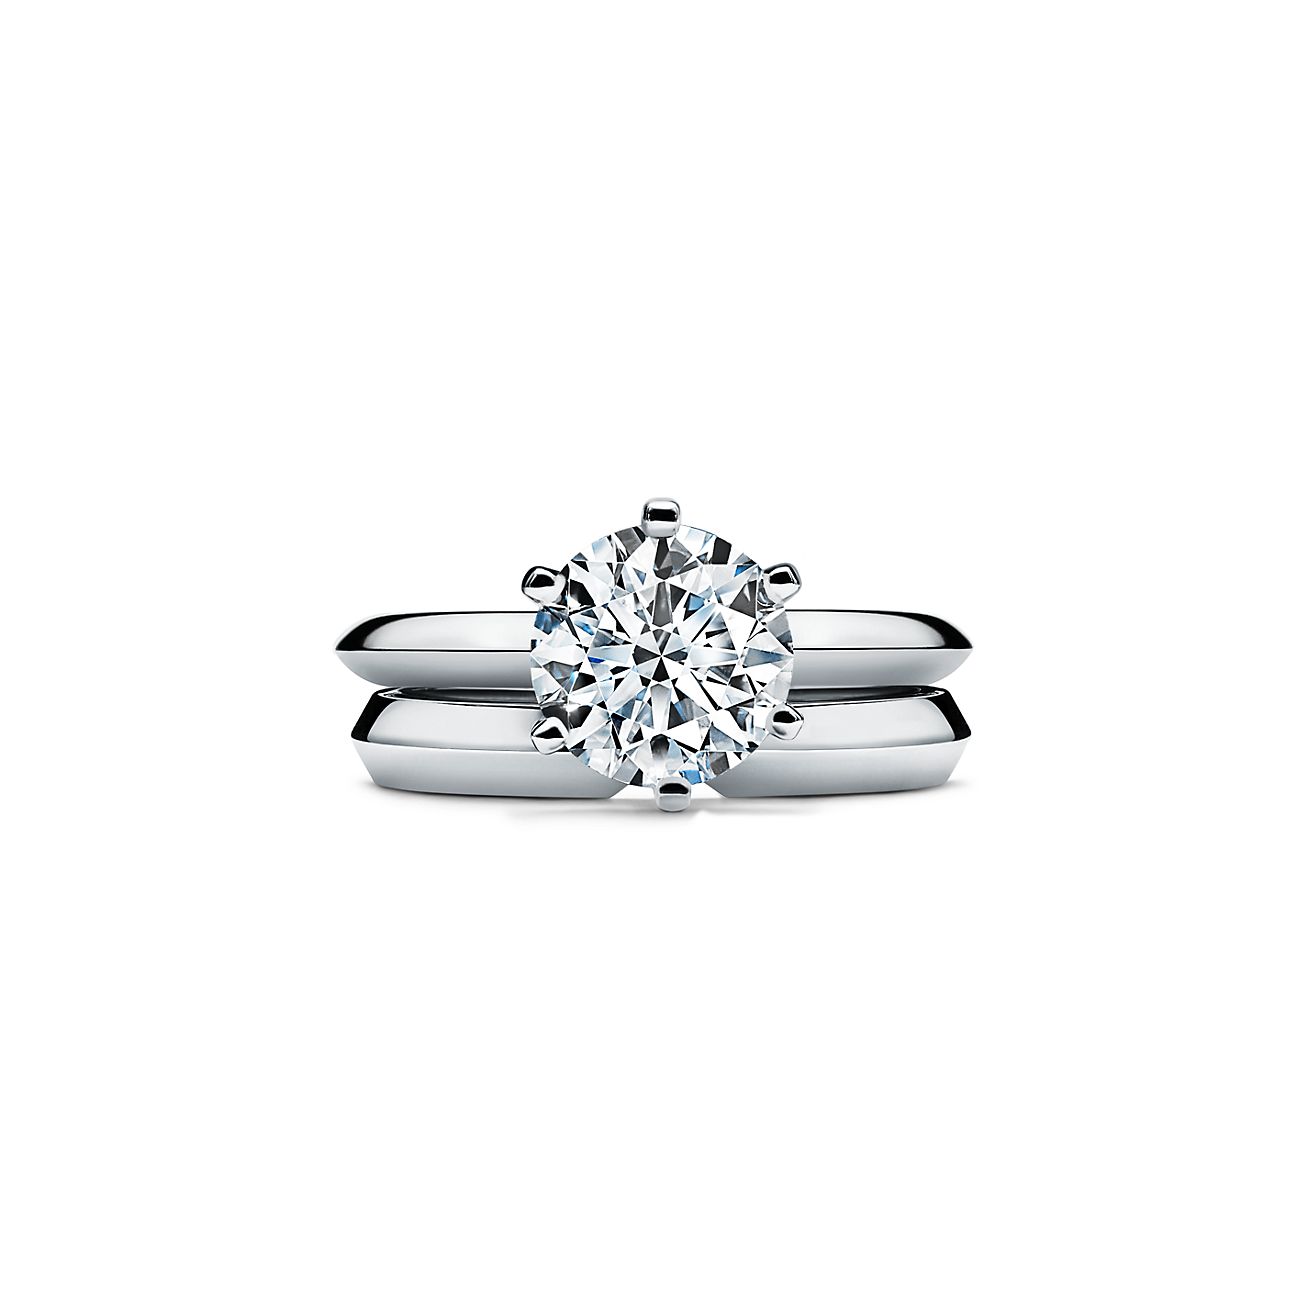 Amazon.com: DesignersJewel 1 Carat Tiffany Style Moissanite Engagement Ring,  Moissanite Diamond, White Gold Plated Sterling Silver Rings for Women,  Handmade Wedding Promise : Handmade Products